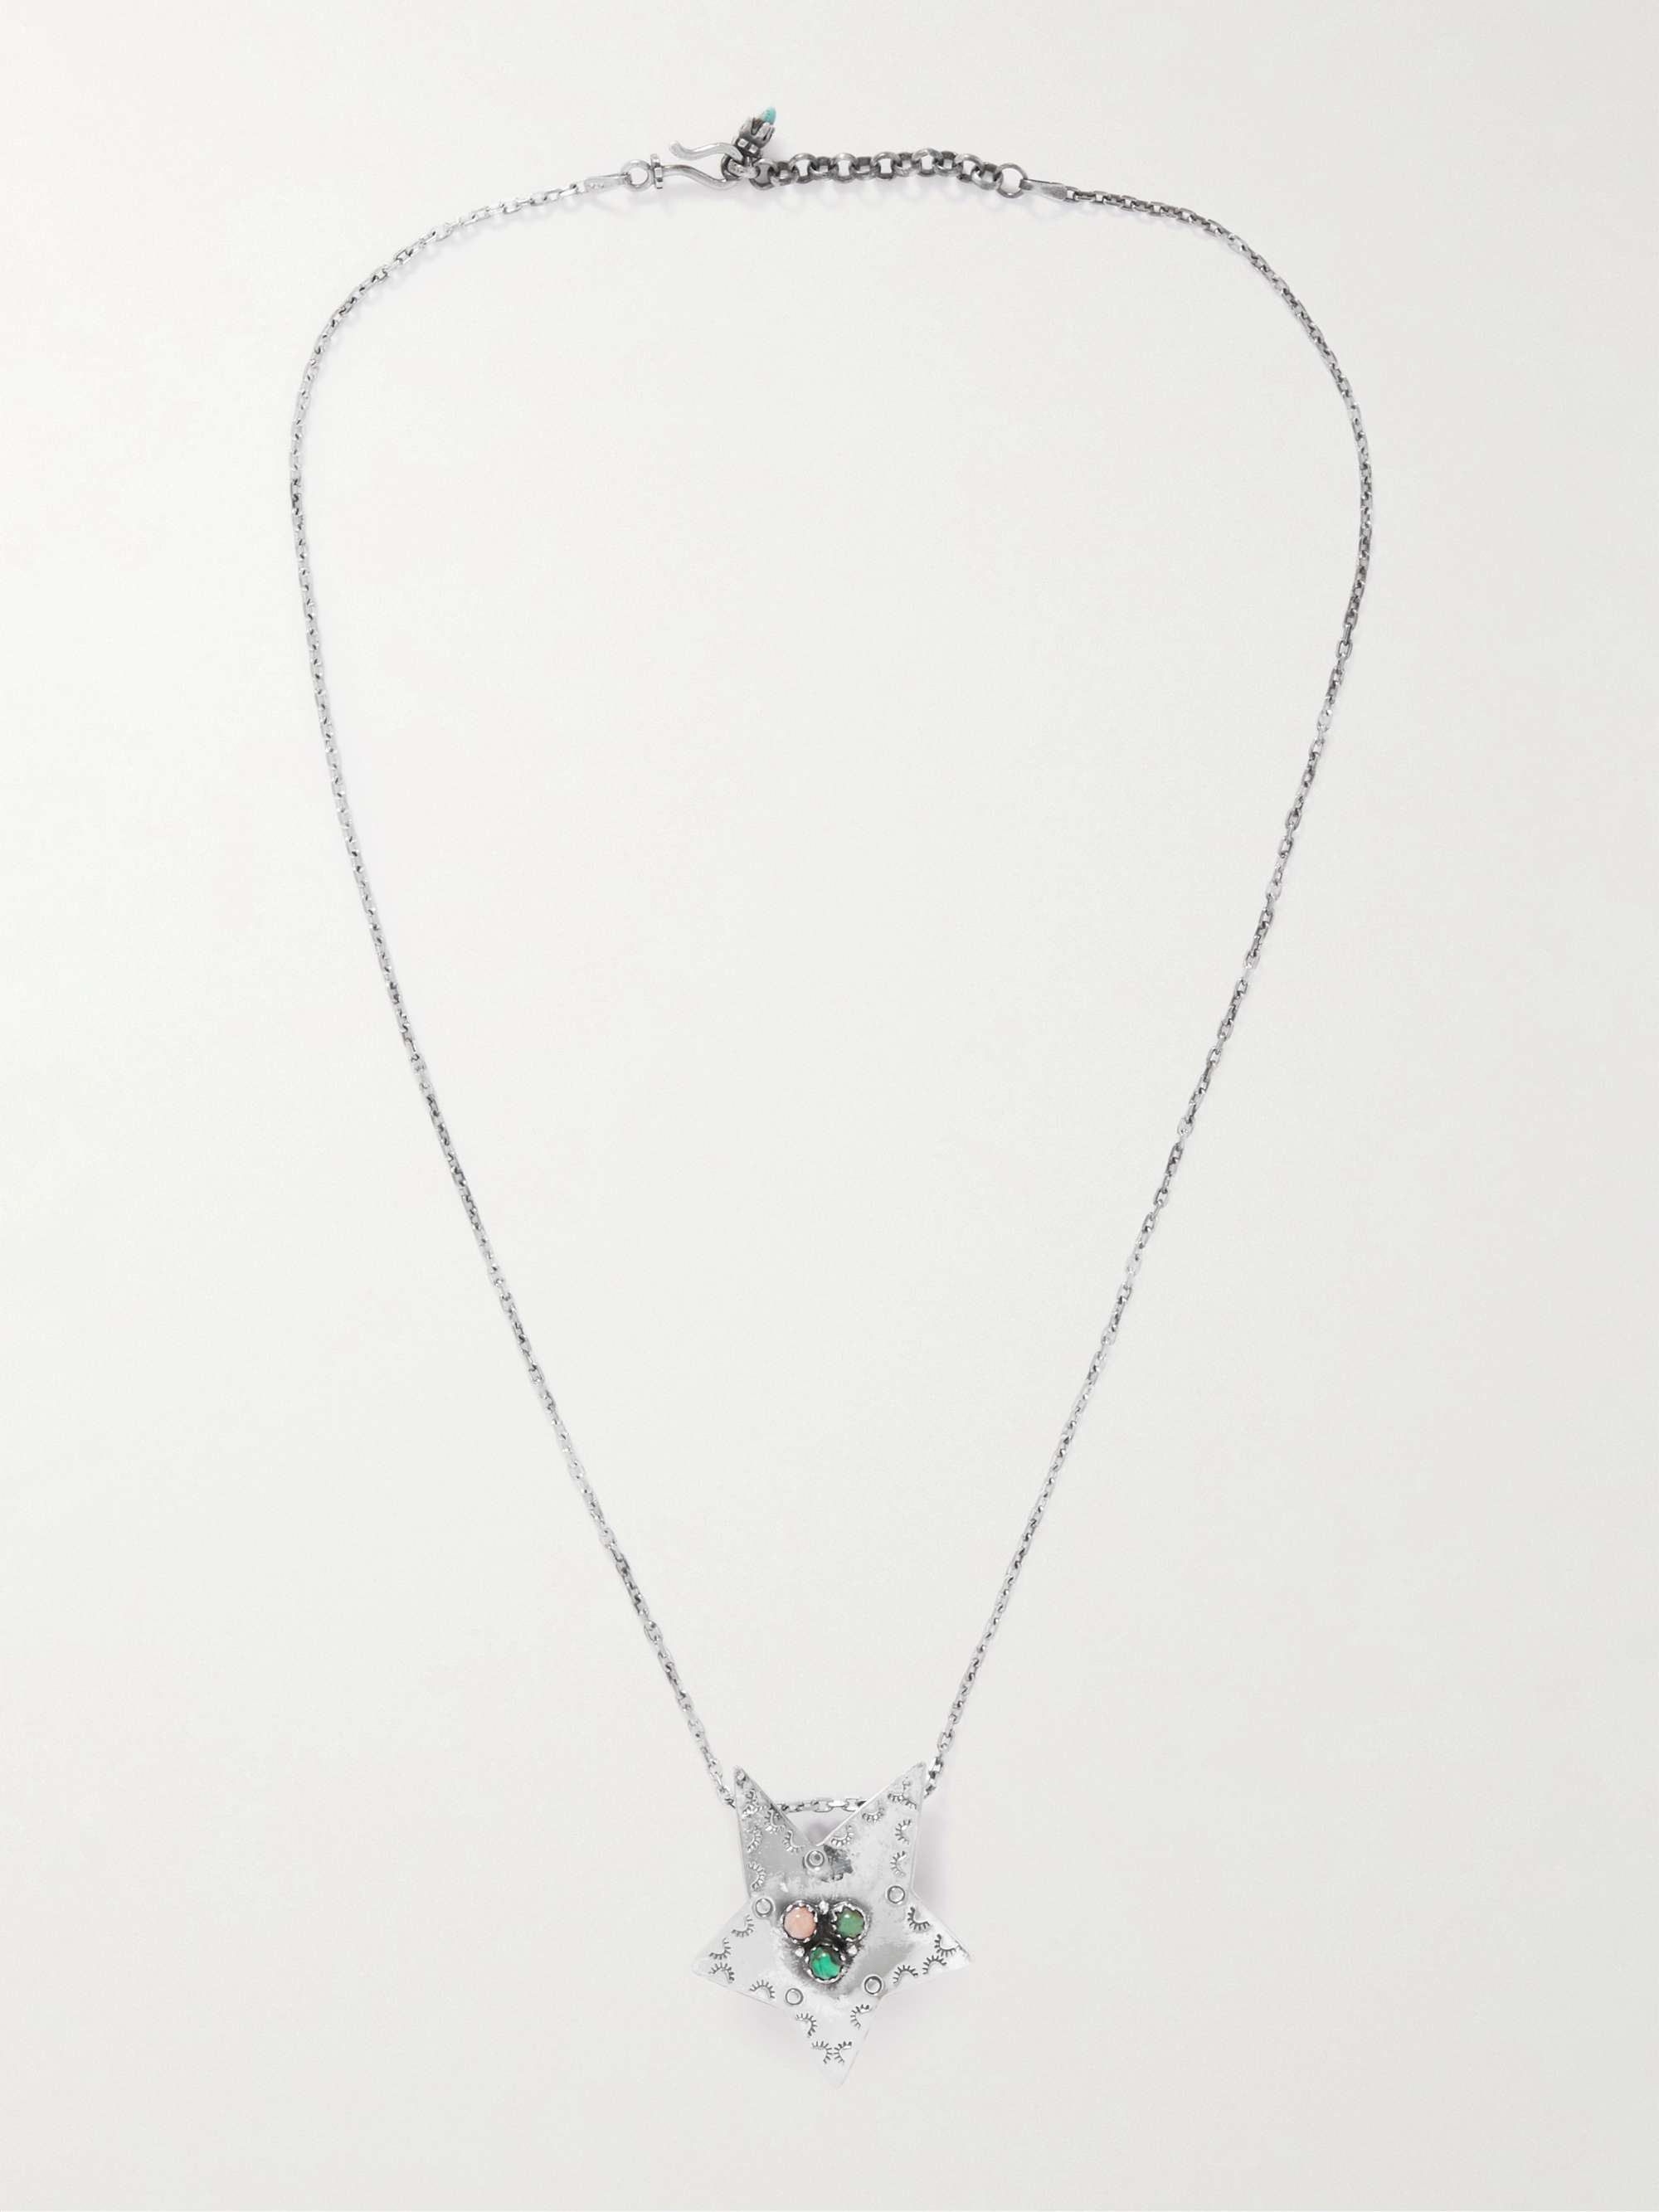 Silver tone necklace #5001